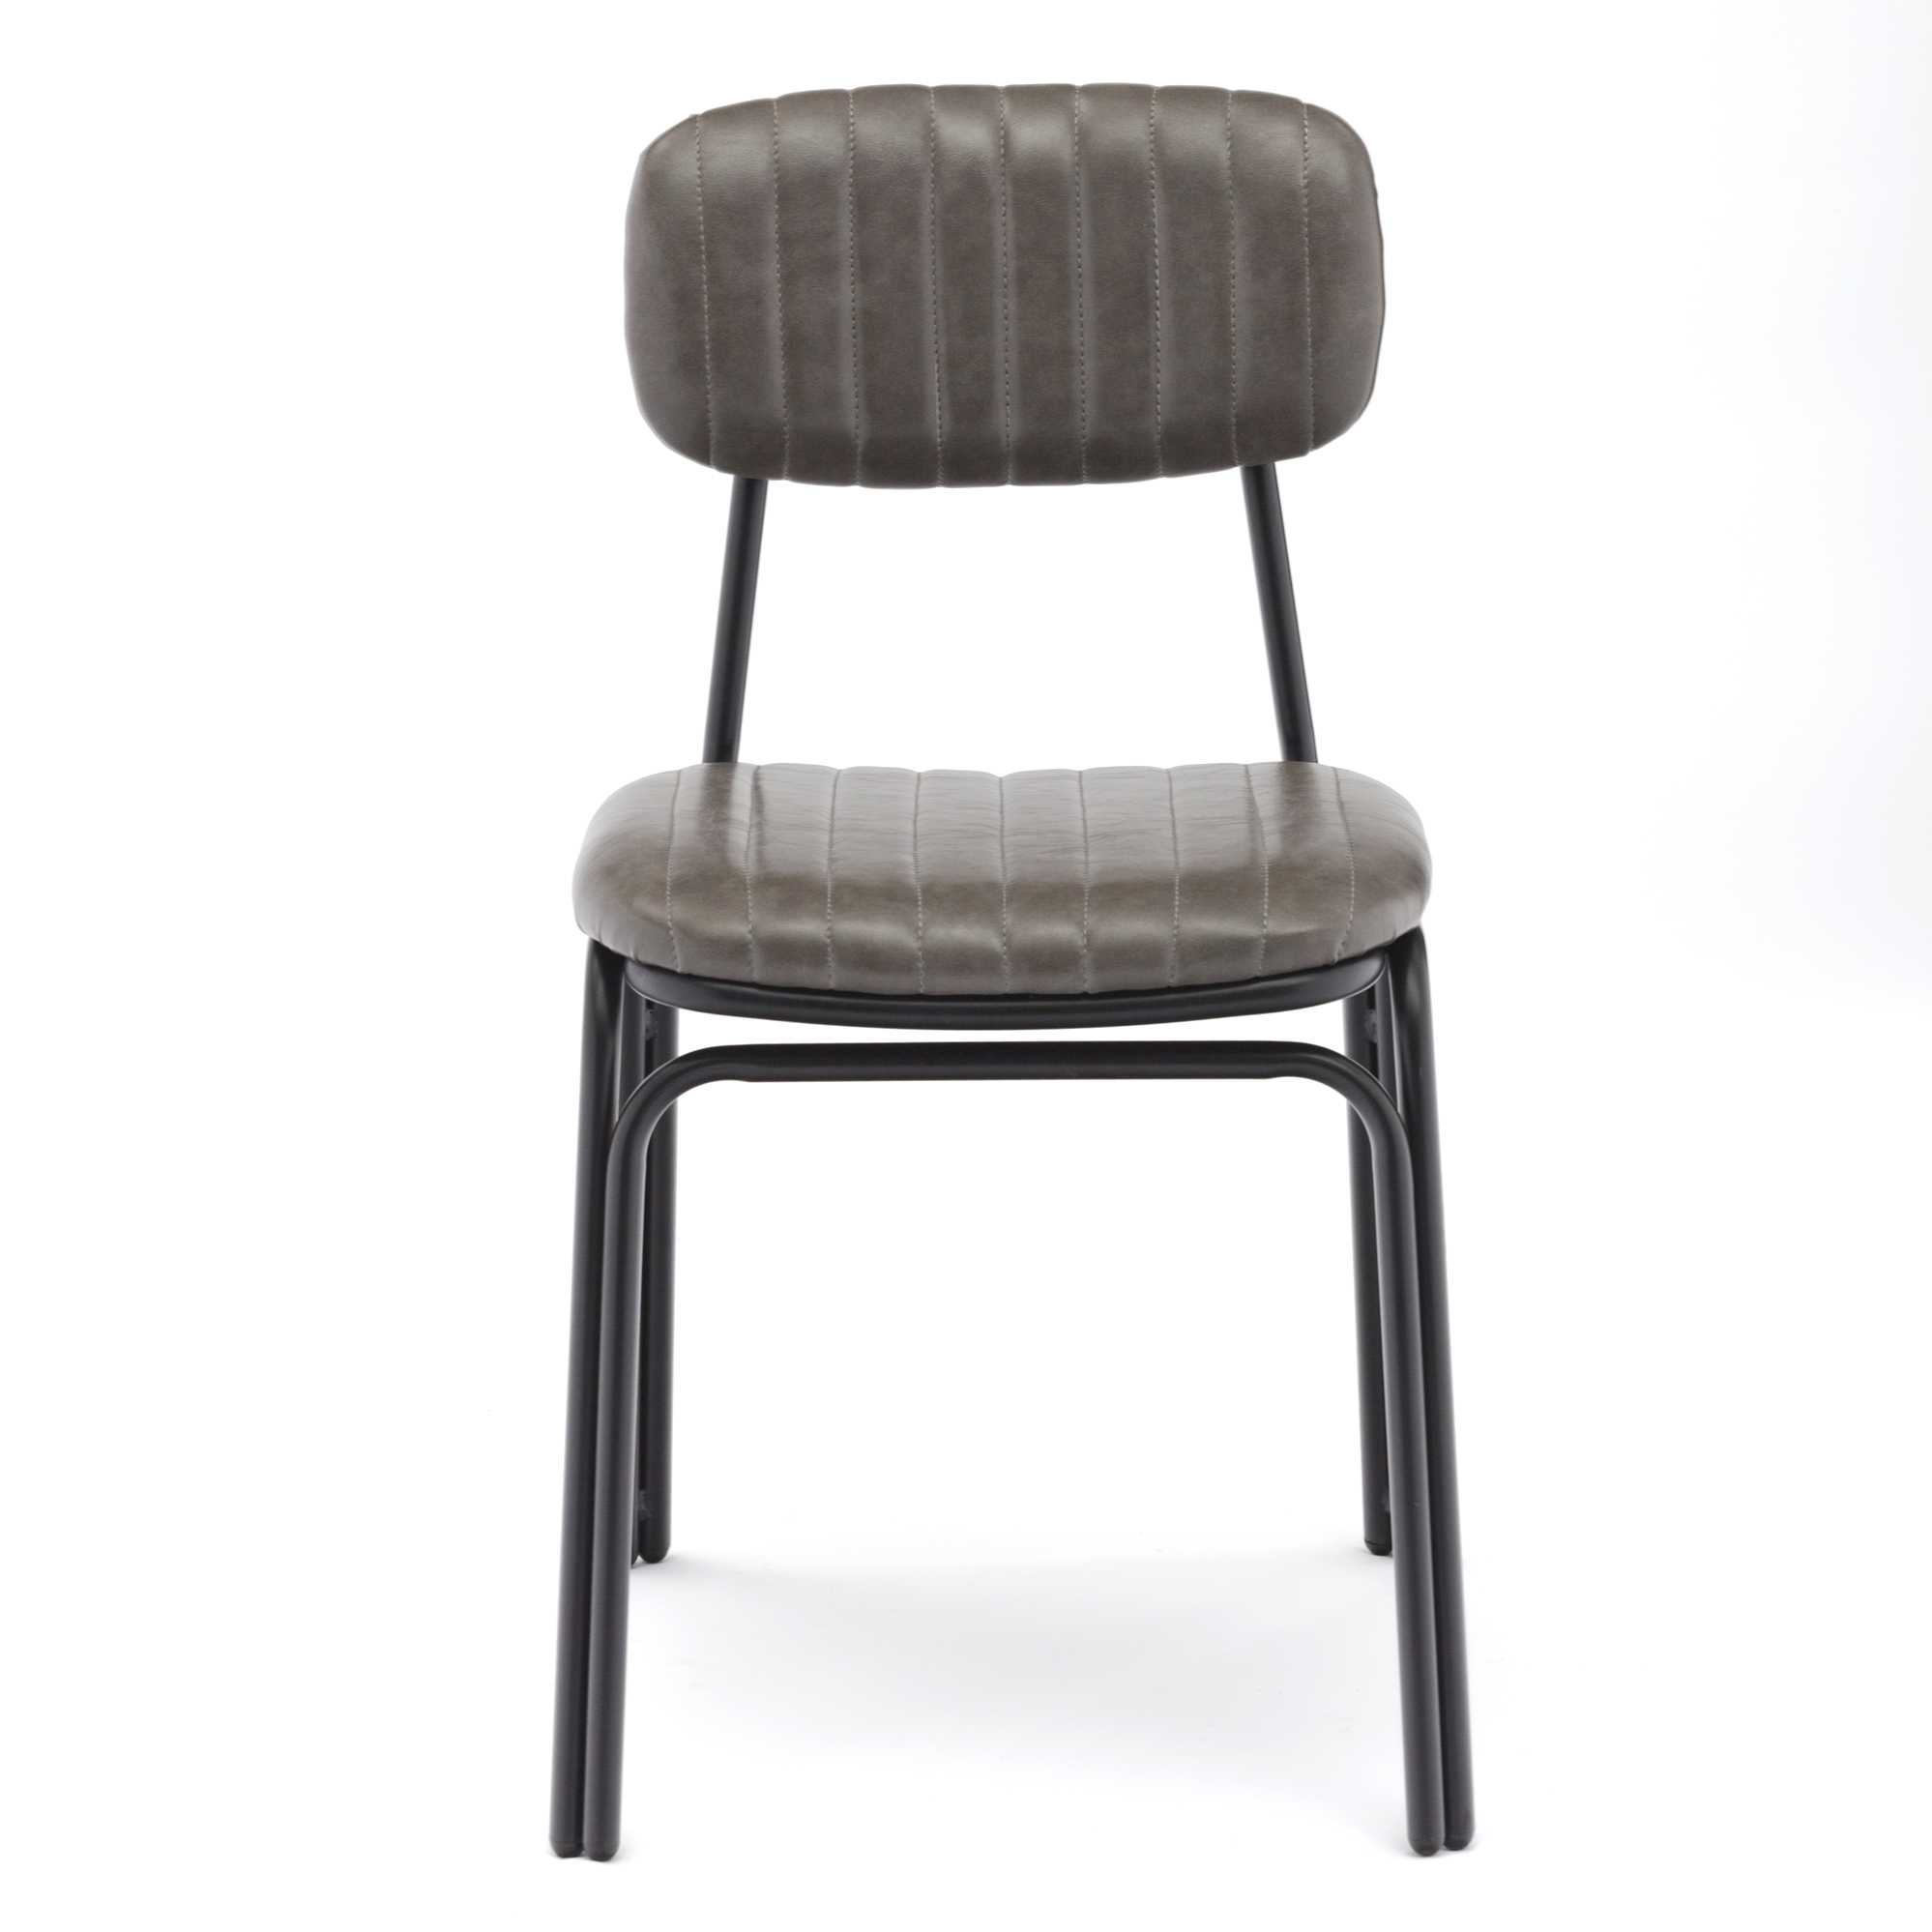 https://www.goldapplefurniture.com/modern-upholstered- Dining-chair-ga3910c-45stp-product/